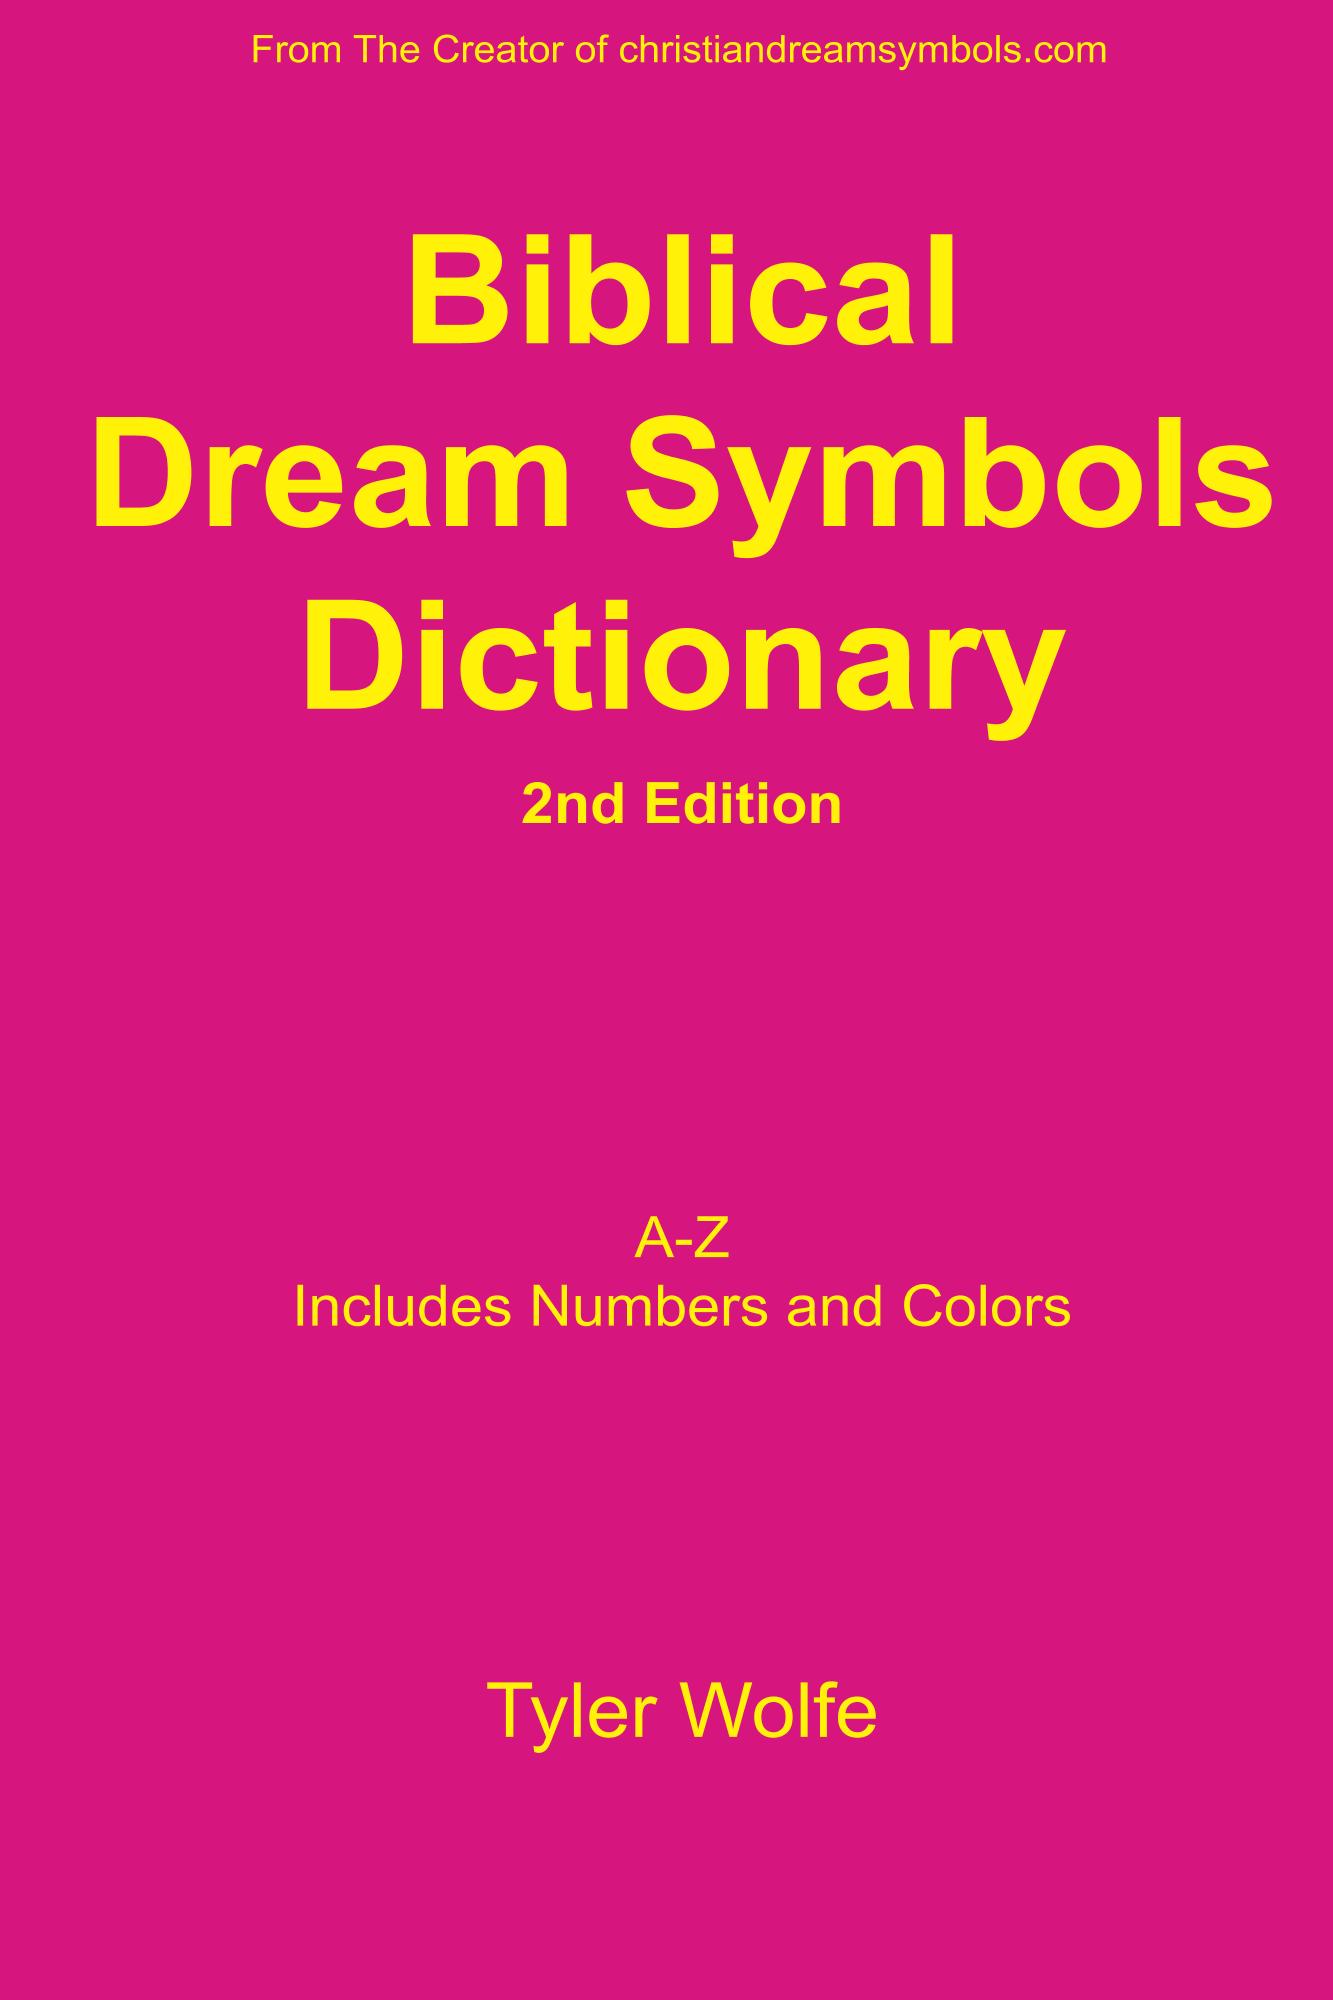 Biblical Dream Symbols Dictionary 2nd Edition